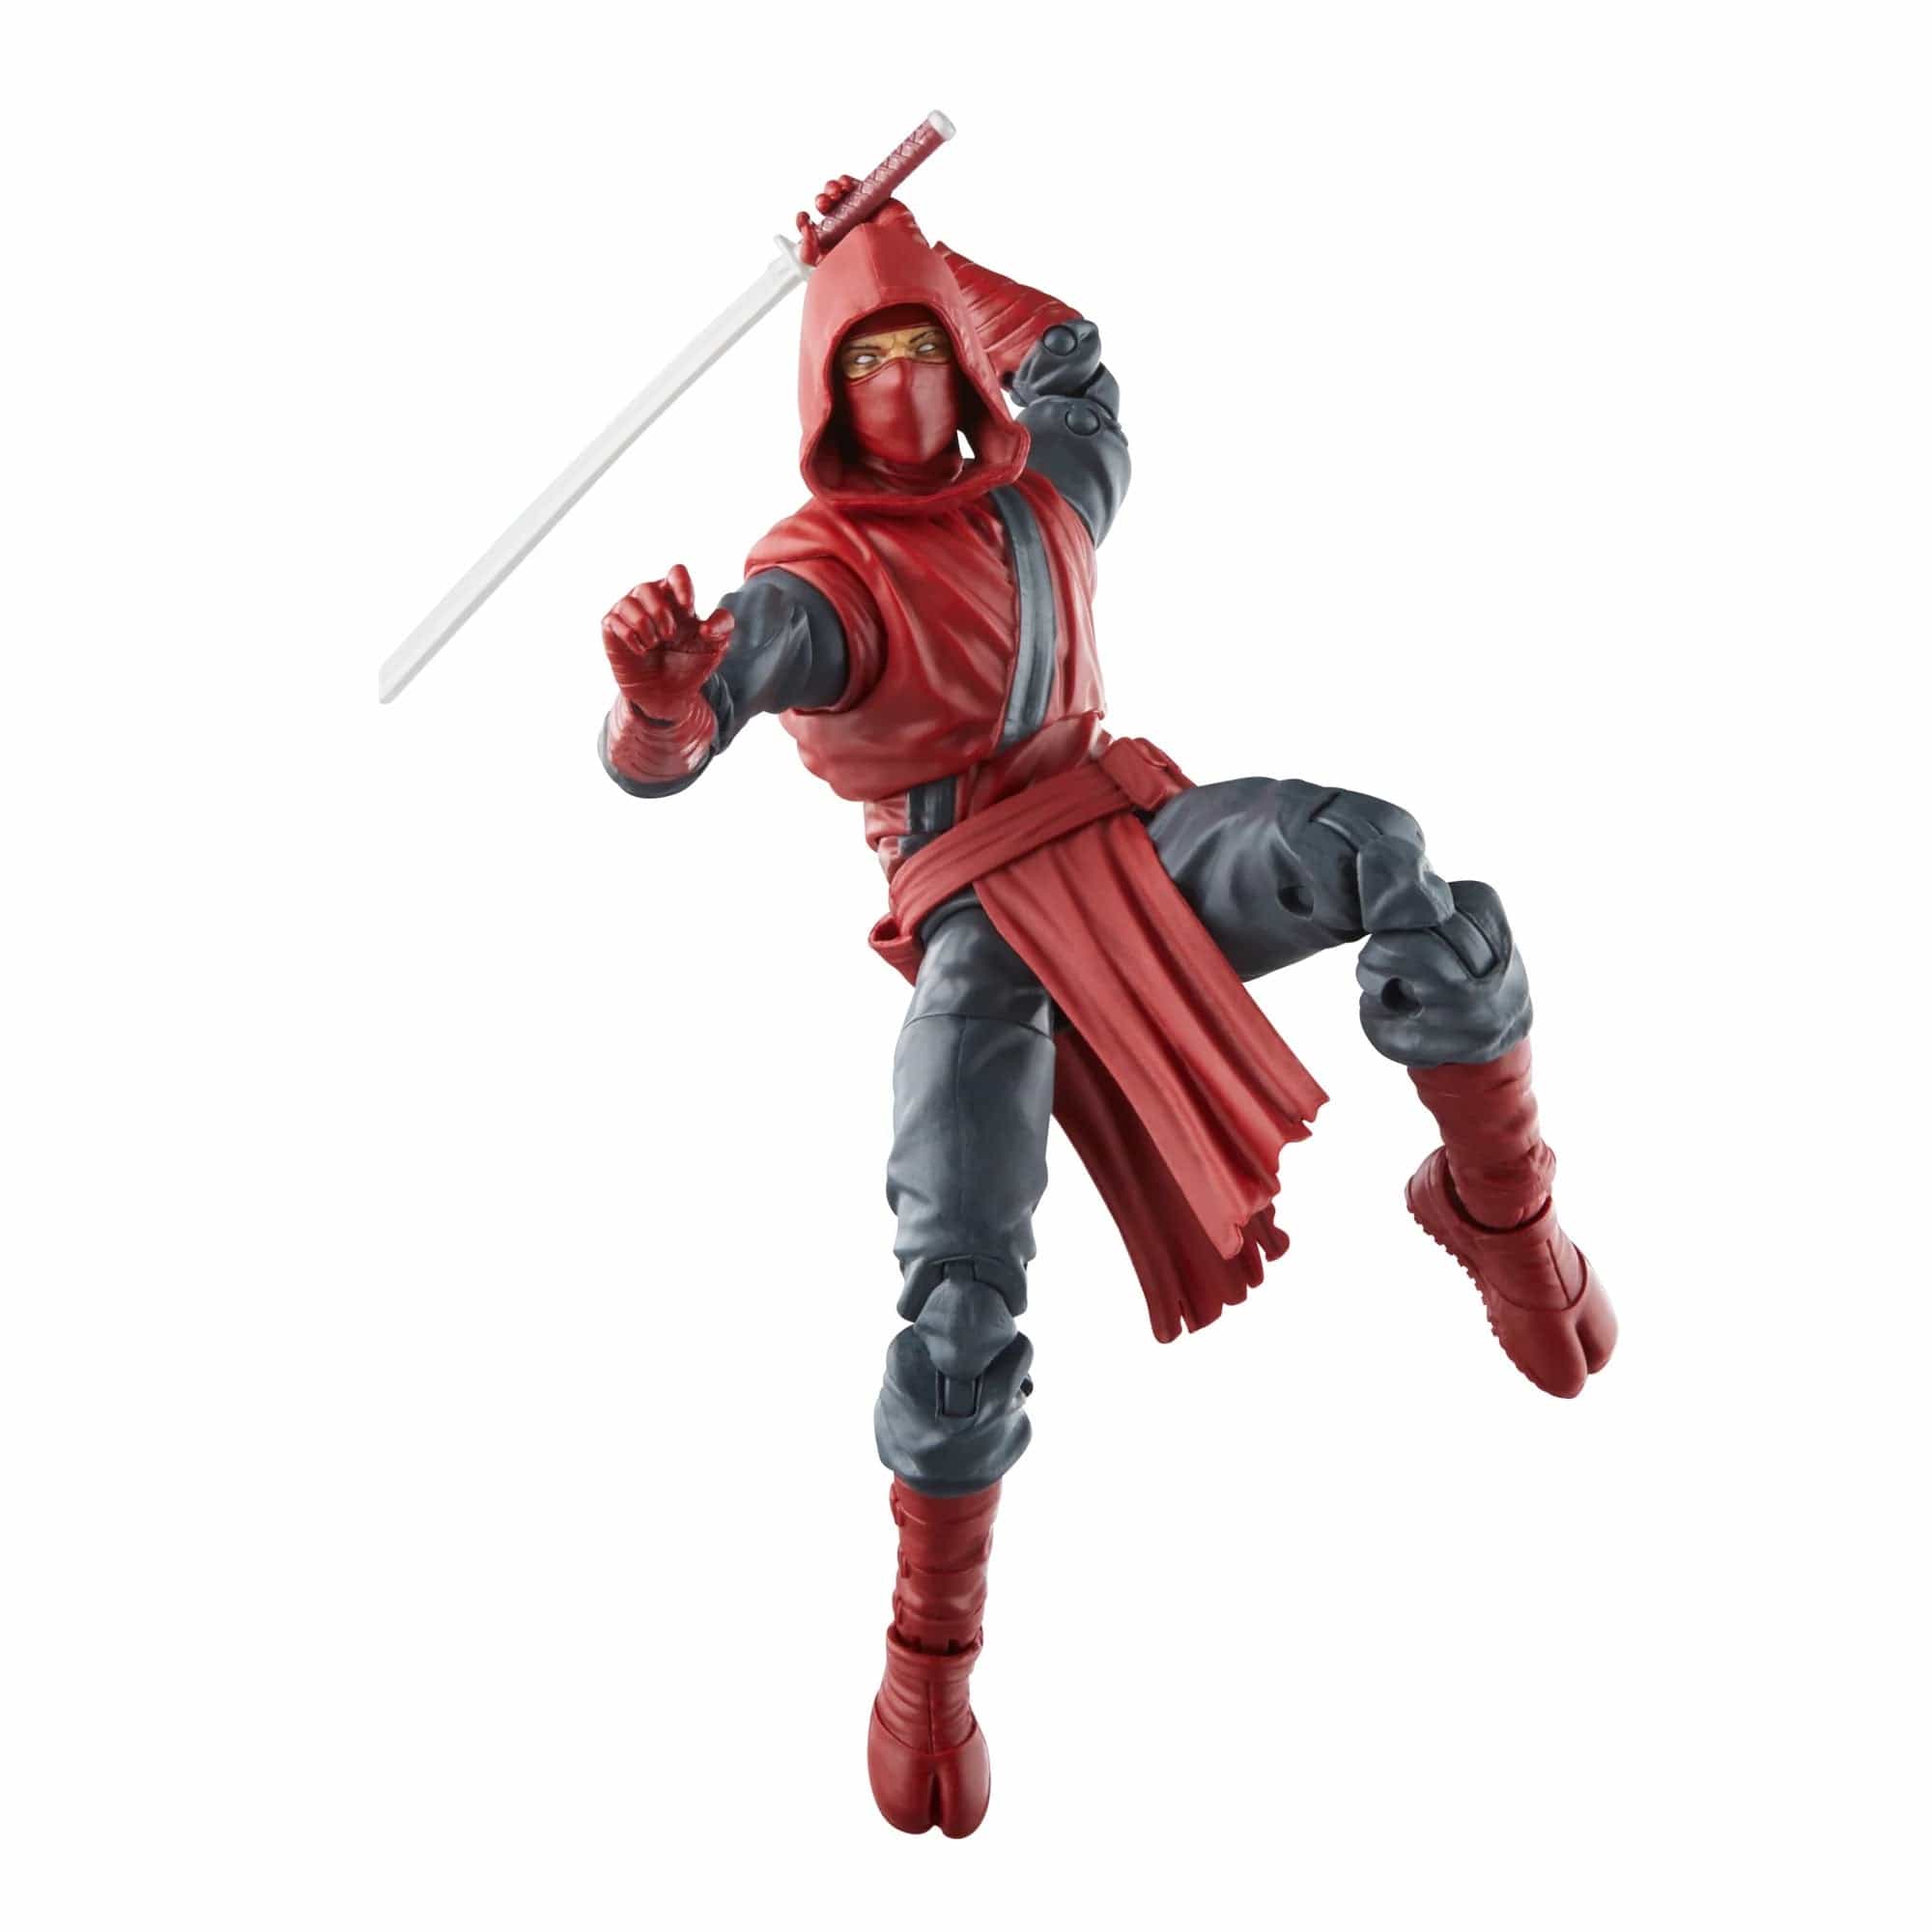 Hasbro Marvel Legends Series The Fist Ninja Action Figure (Mindless One Build-A-Figure)